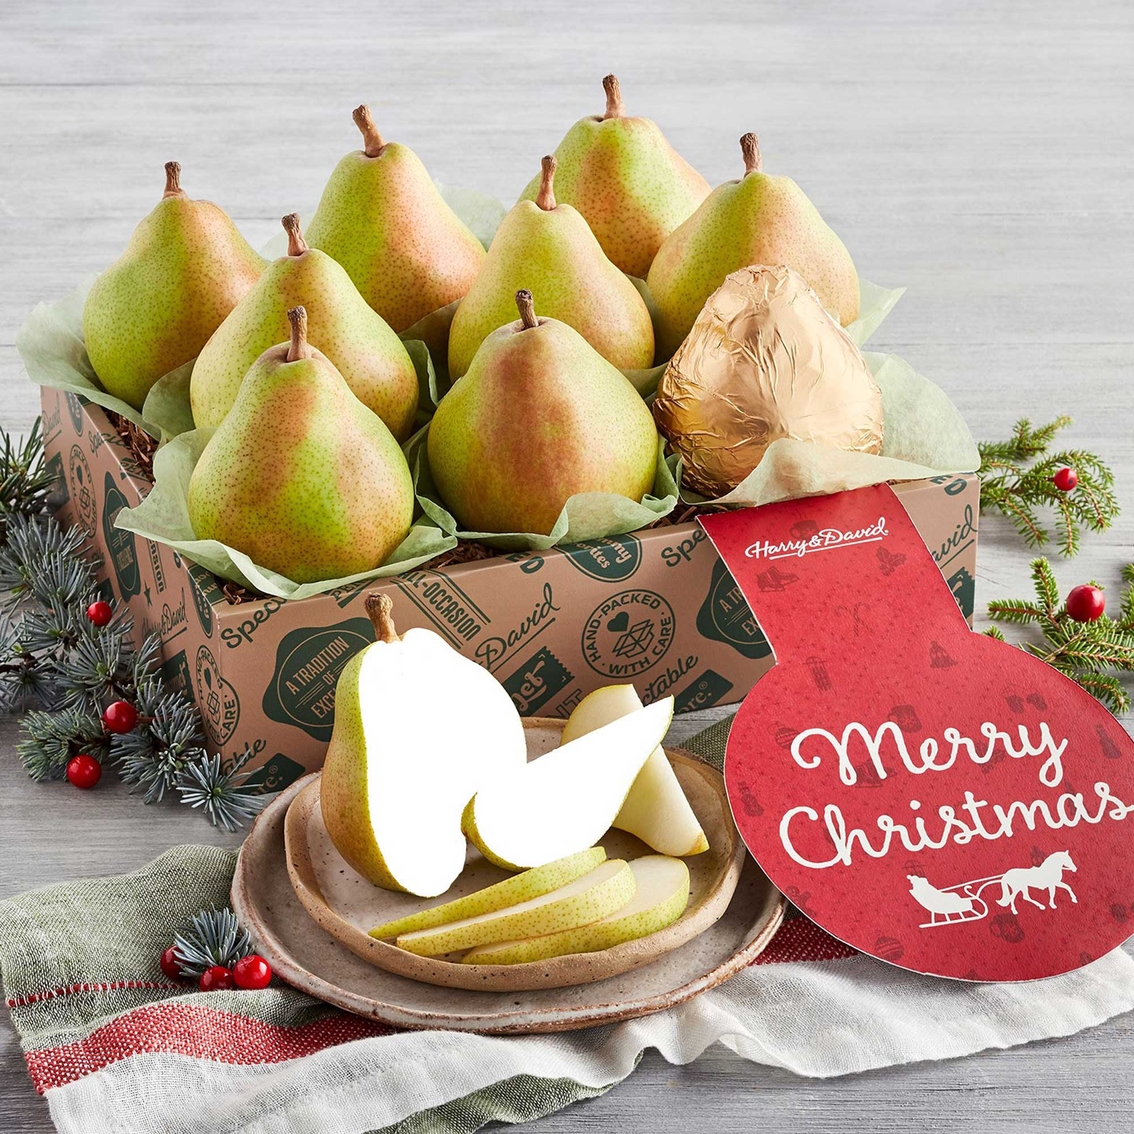 Harry & David Christmas Pears 5 lb.